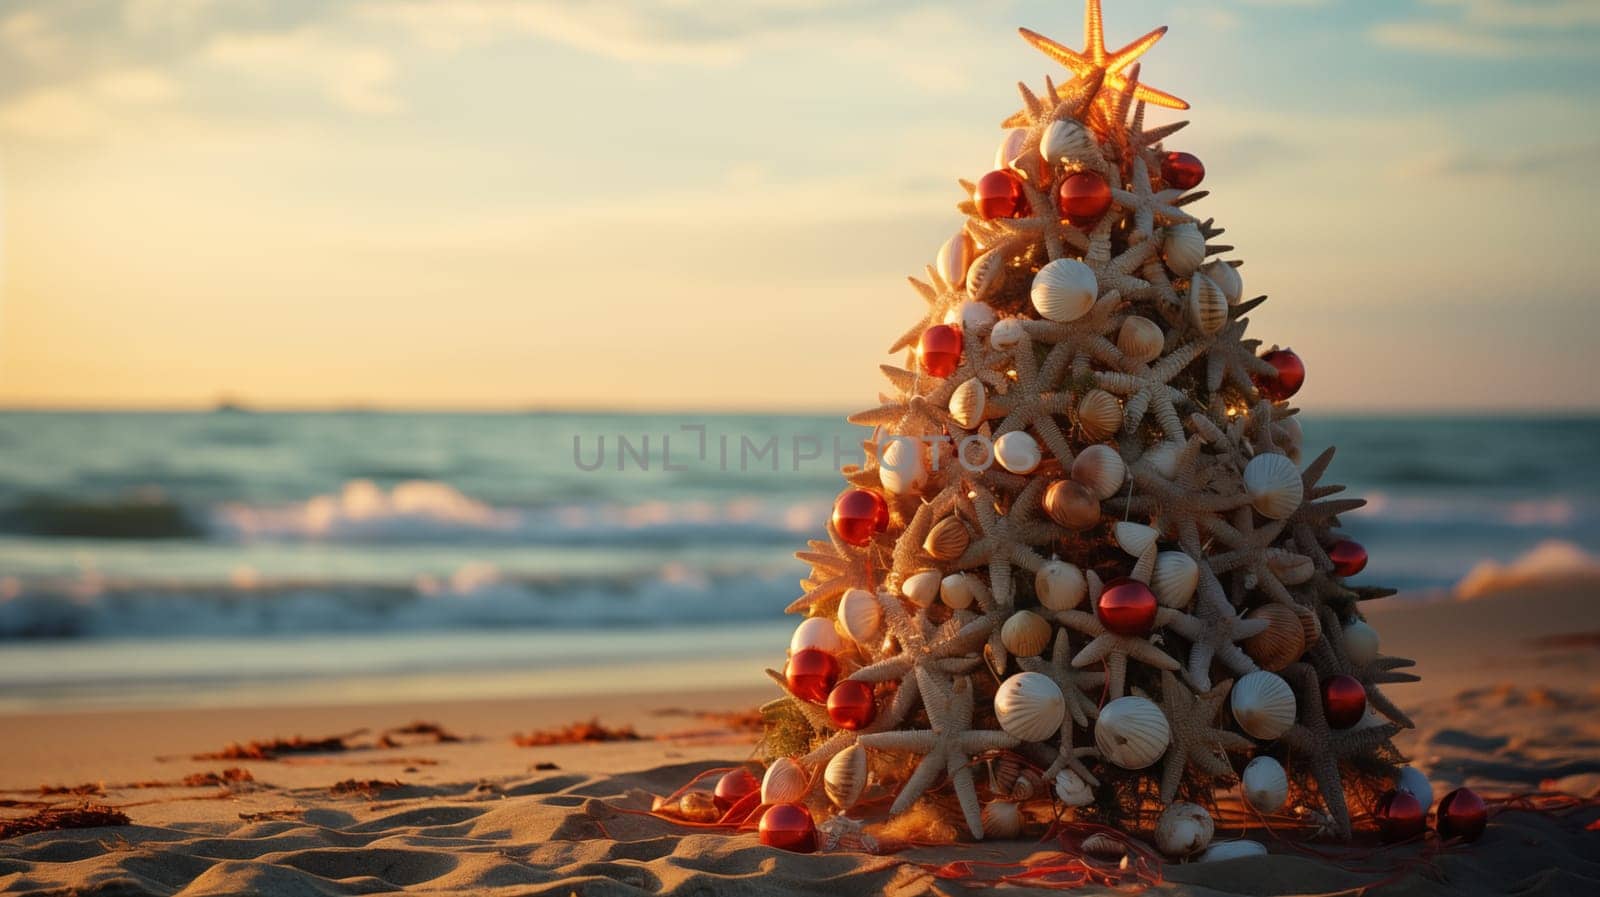 Beautiful Christmas tree made of seashells standing on the coast at sunset.